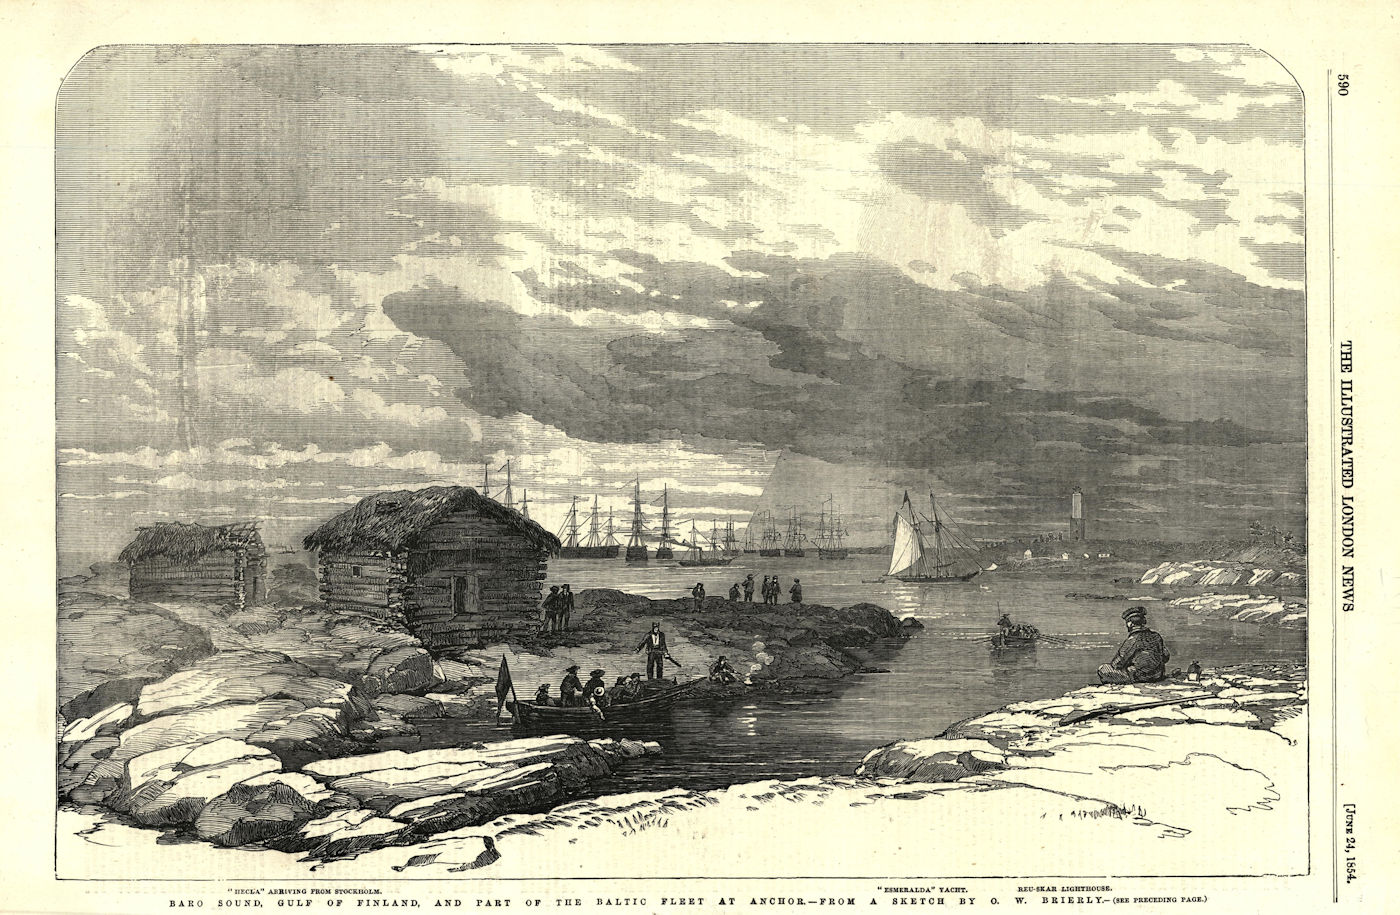 Baro Sound, Gulf of Finland. Baltic Fleet at anchor. Reu-Skar Lighthouse 1854